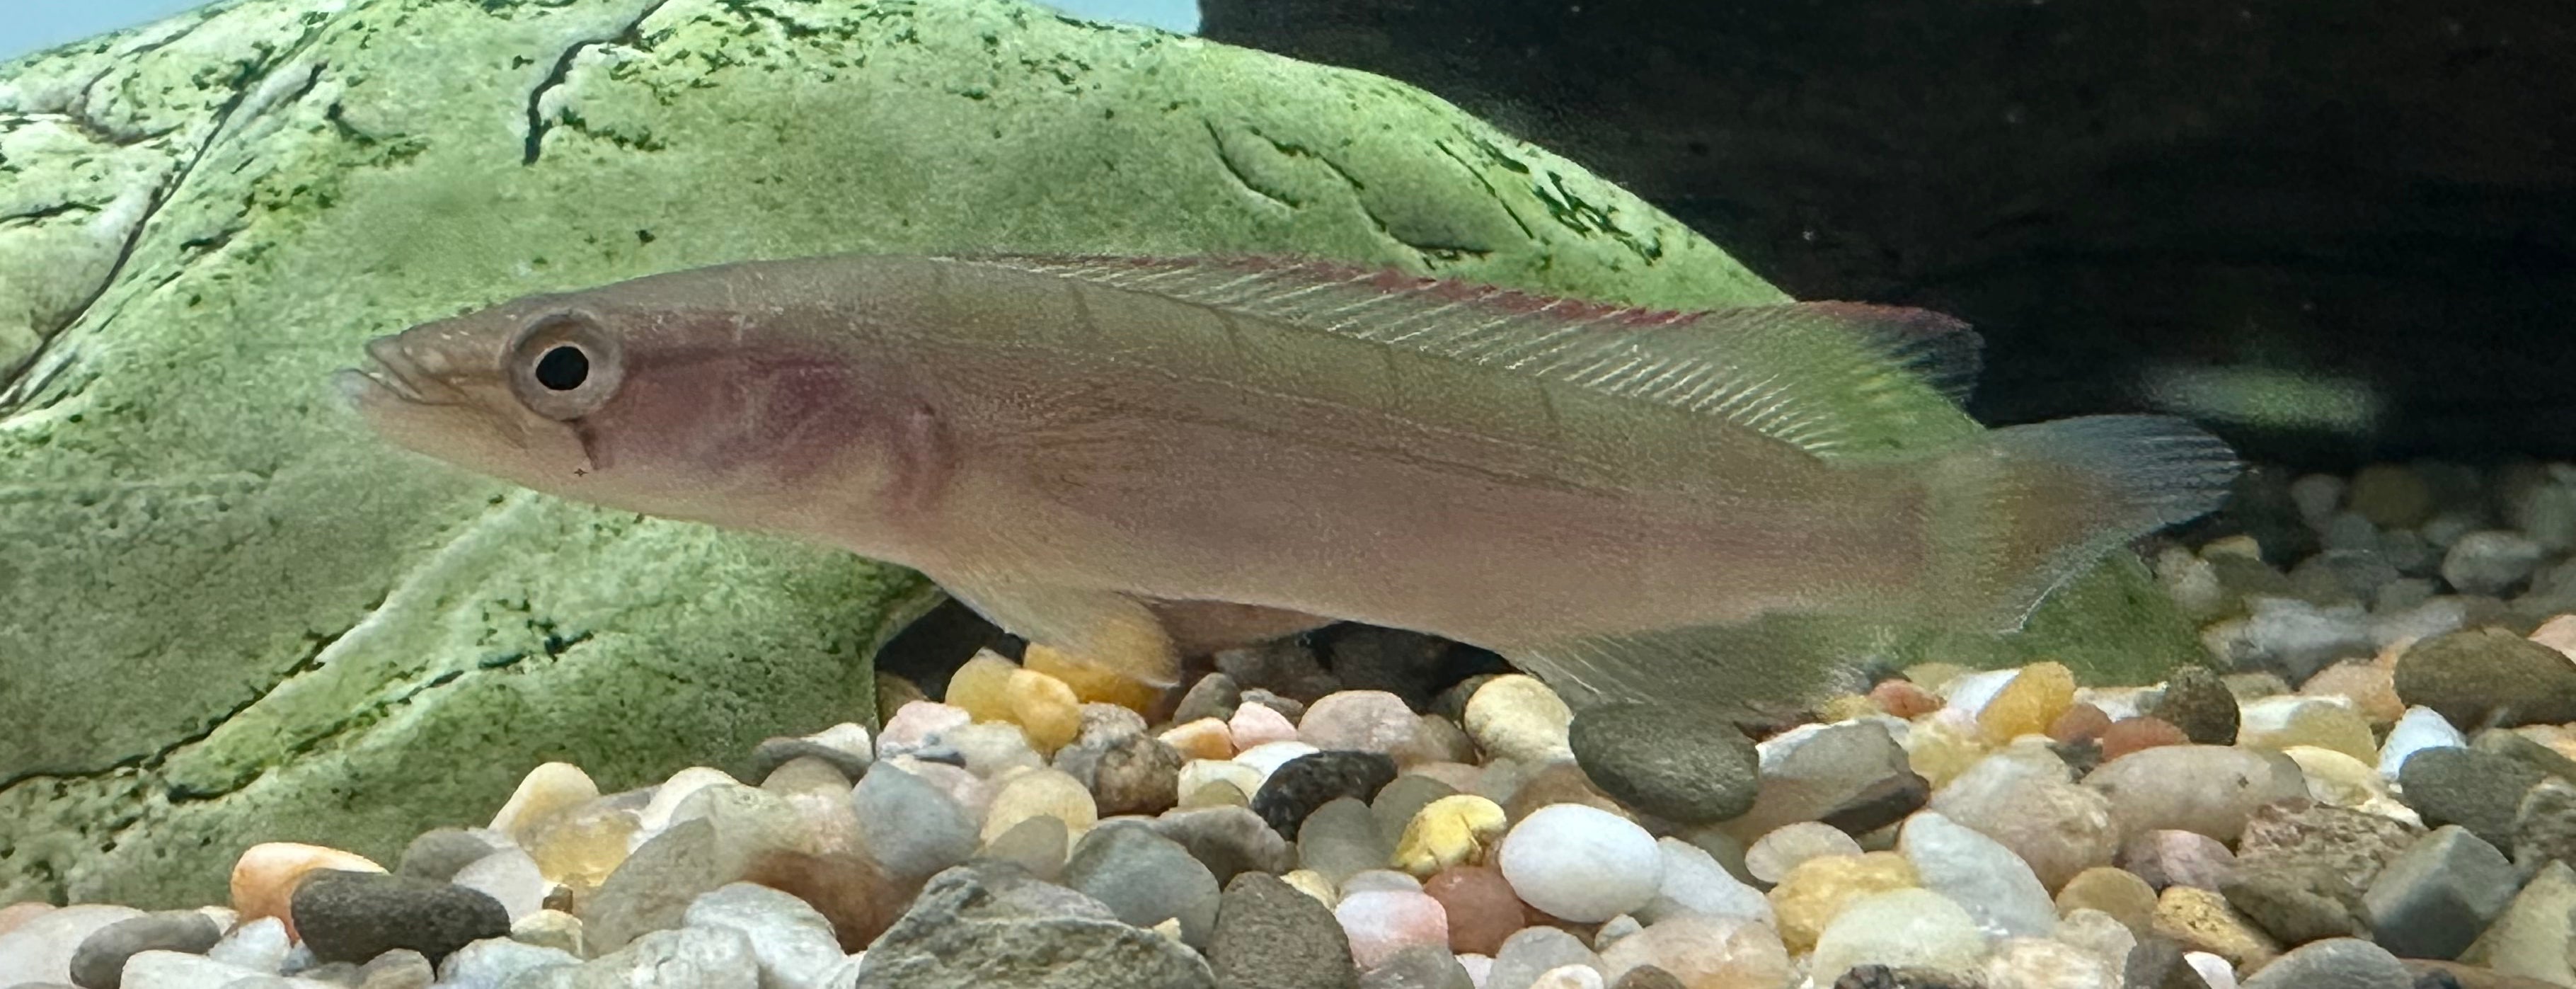 Red Atabapo Pike Cichlid (4-4.5”)